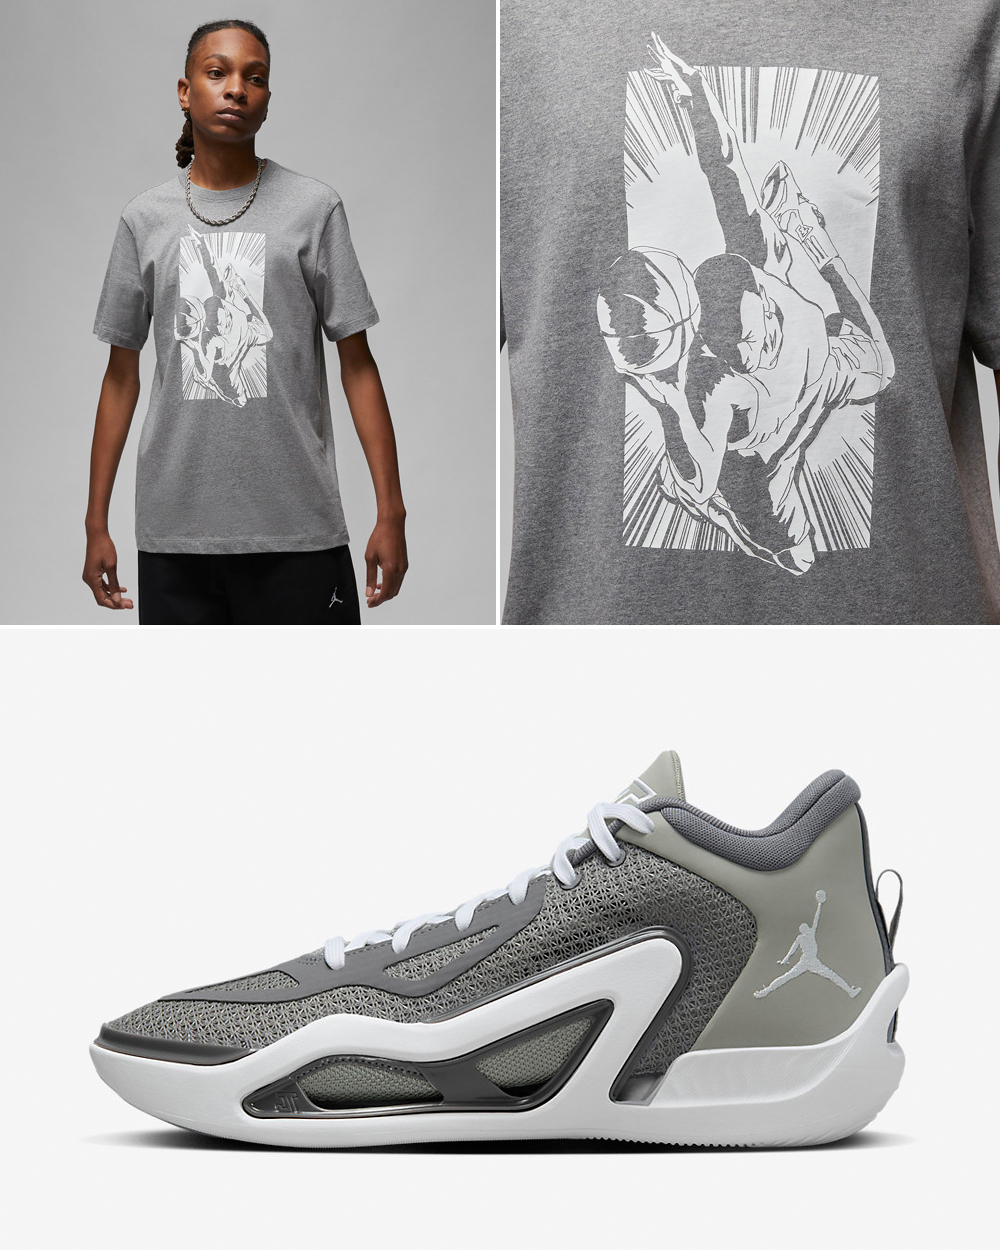 Jordan-Tatum-1-Cool-Grey-T-Shirt-Match-1